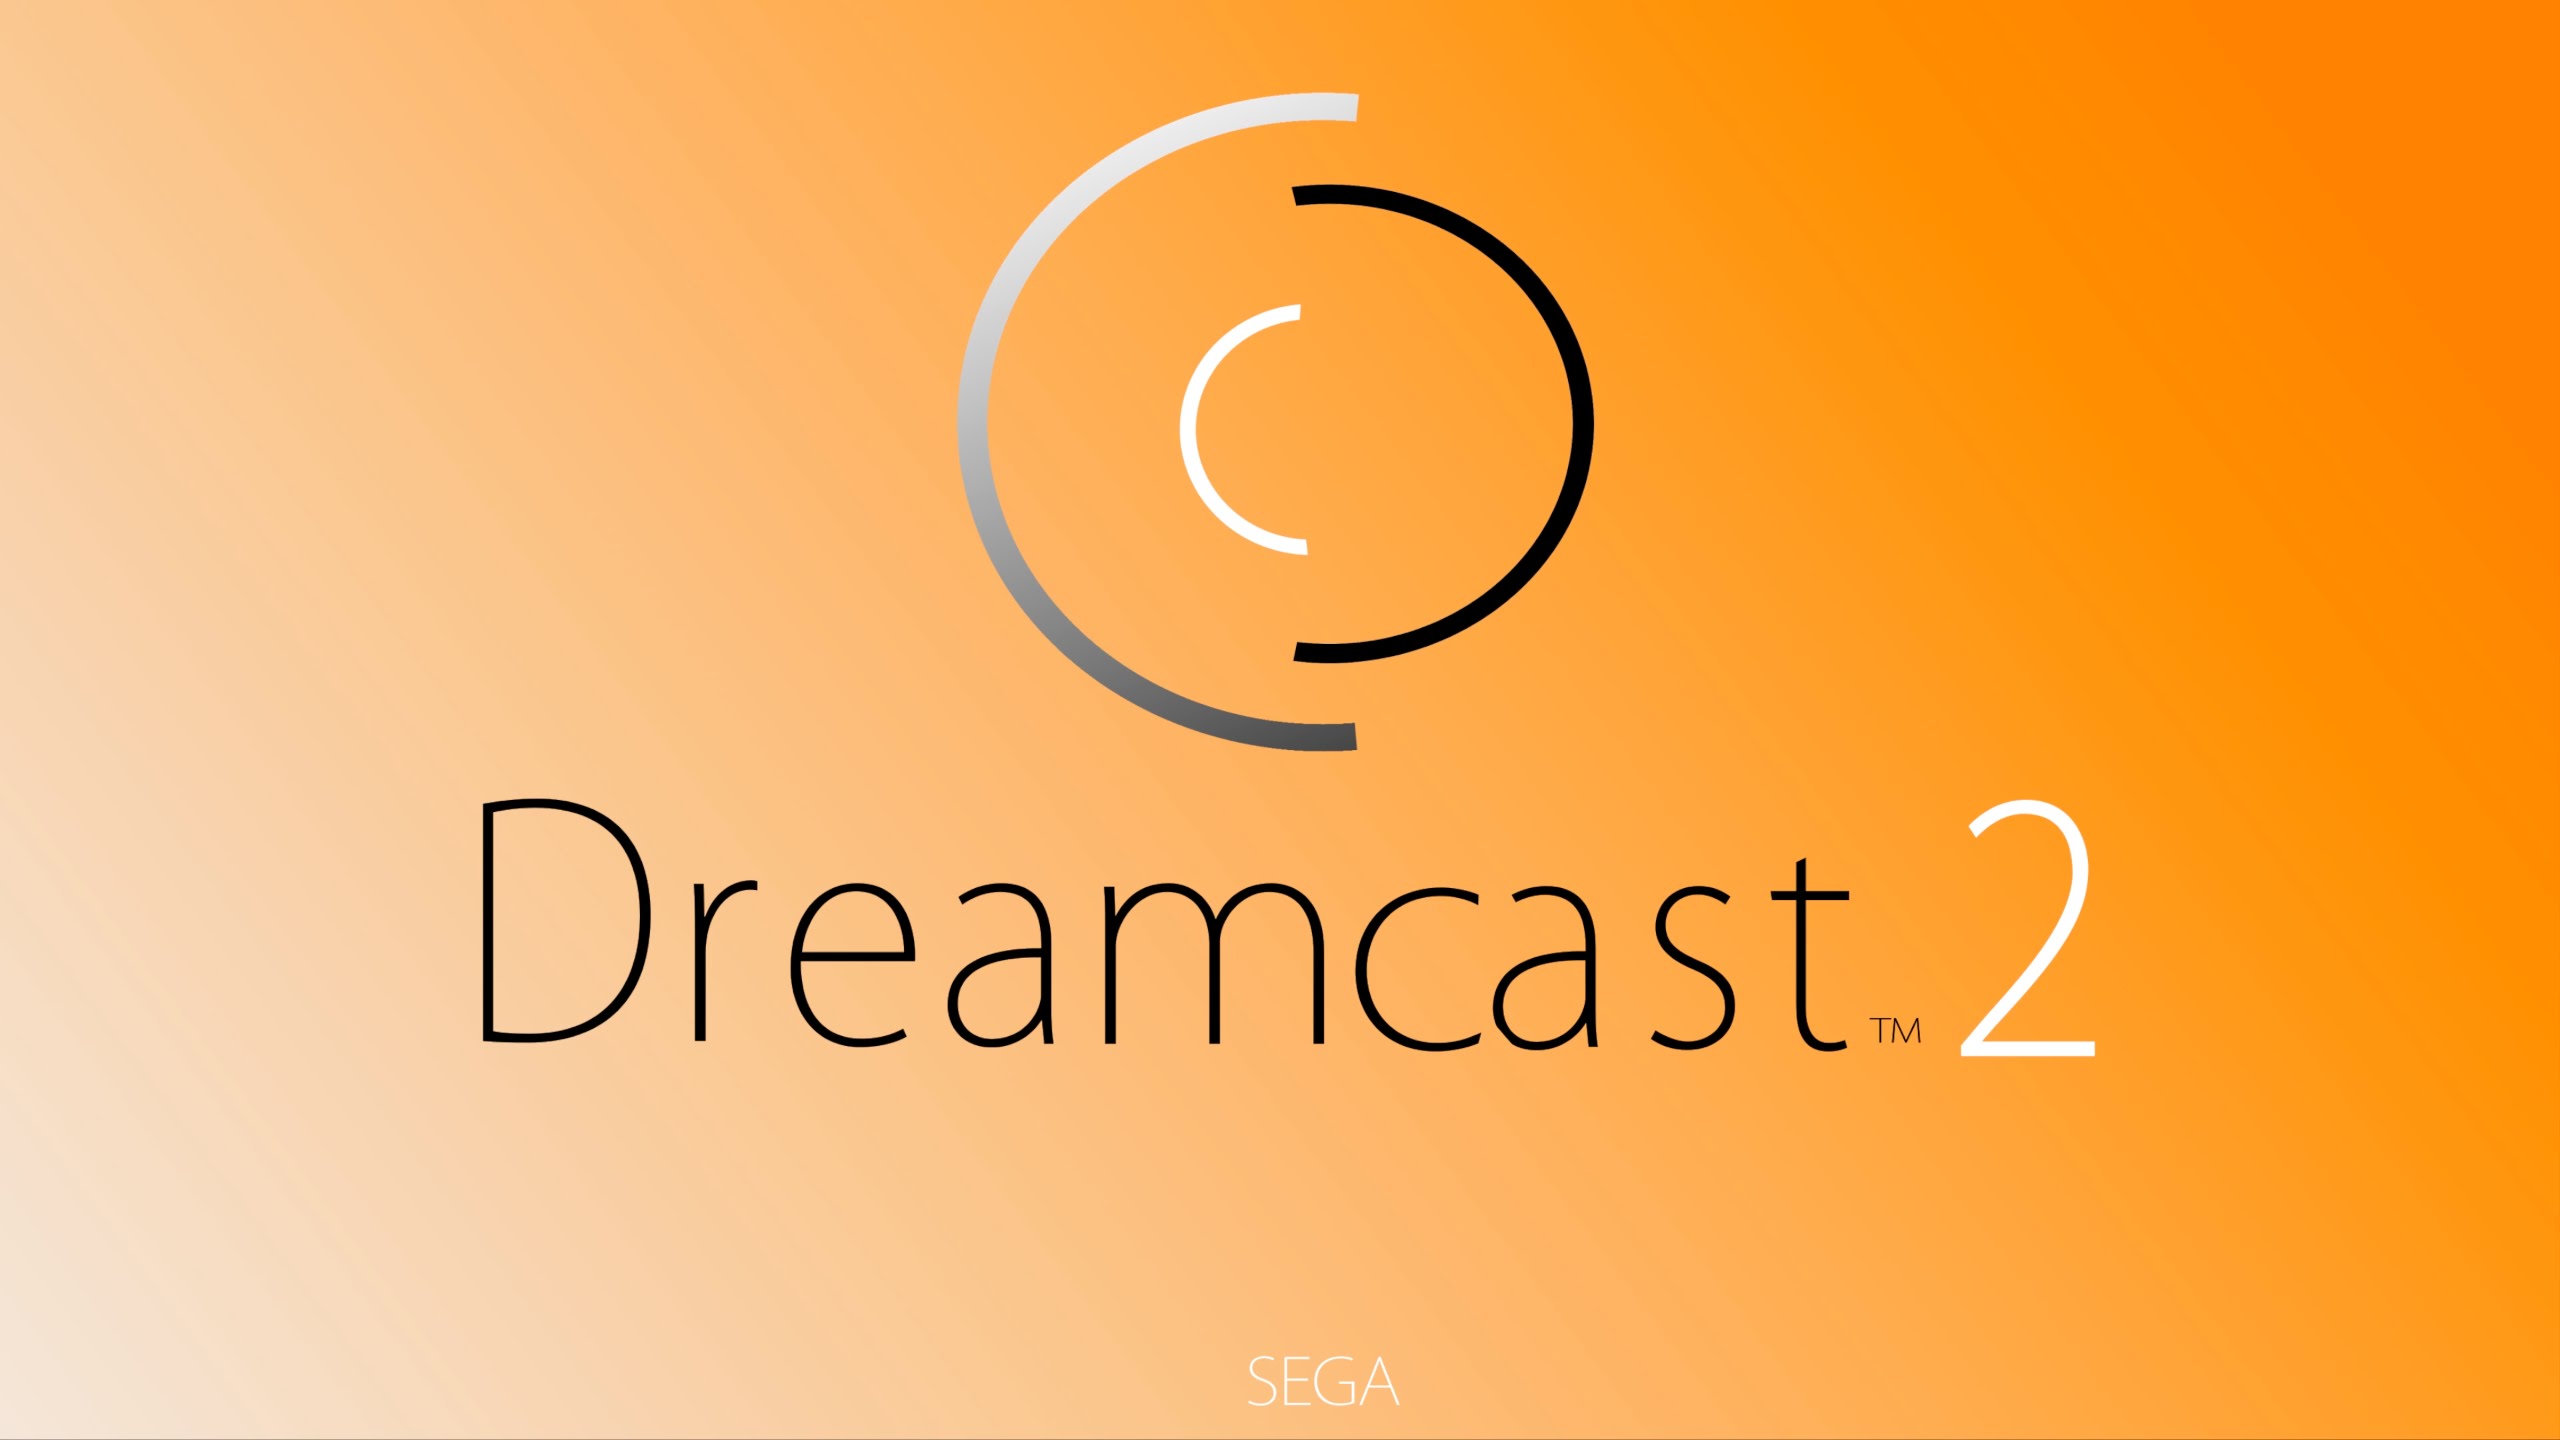 Free download Startup Dreamcast 2 in 4K 60P Sega Dreamcast Logo [2560x1440] for your Desktop, Mobile & Tablet. Explore Dreamcast Wallpaper. Sonic Adventure 2 Wallpaper, Sega Genesis Wallpaper, Sega Dreamcast Wallpaper